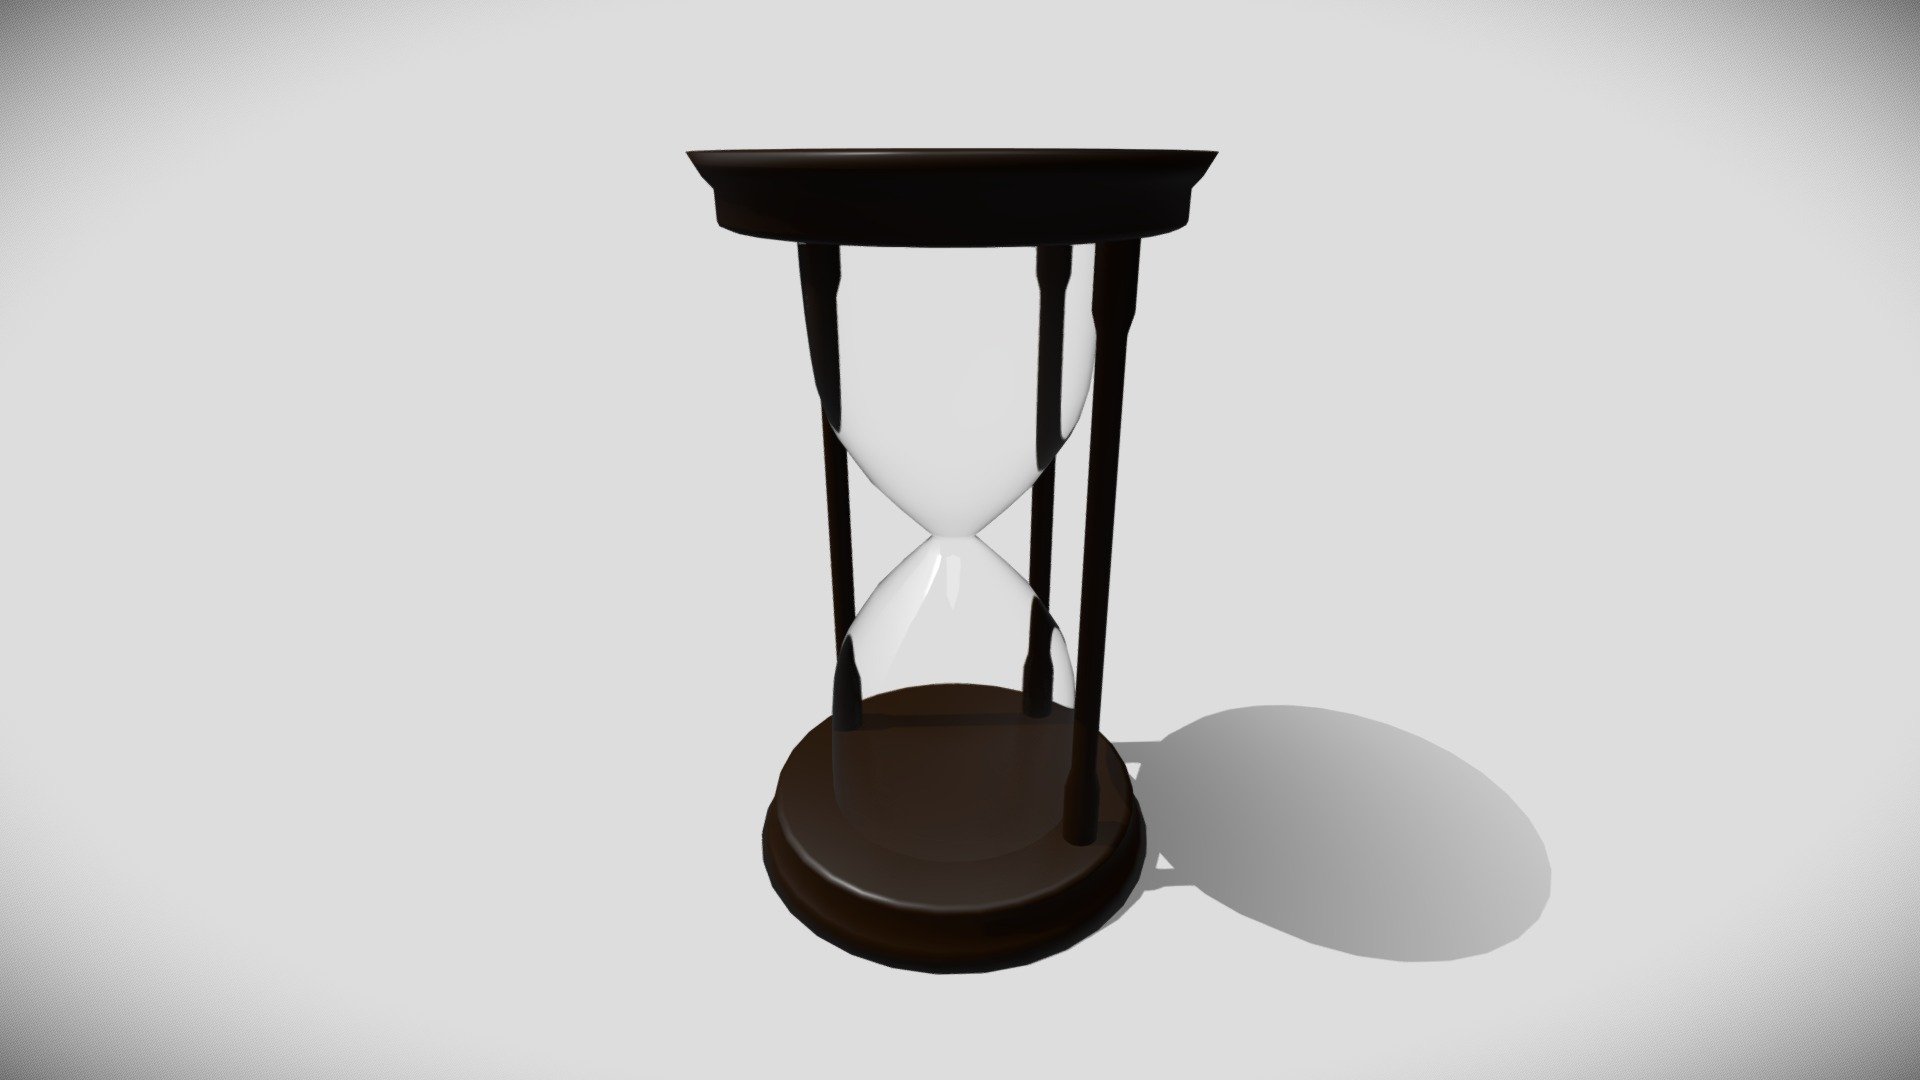 Empty hourglass